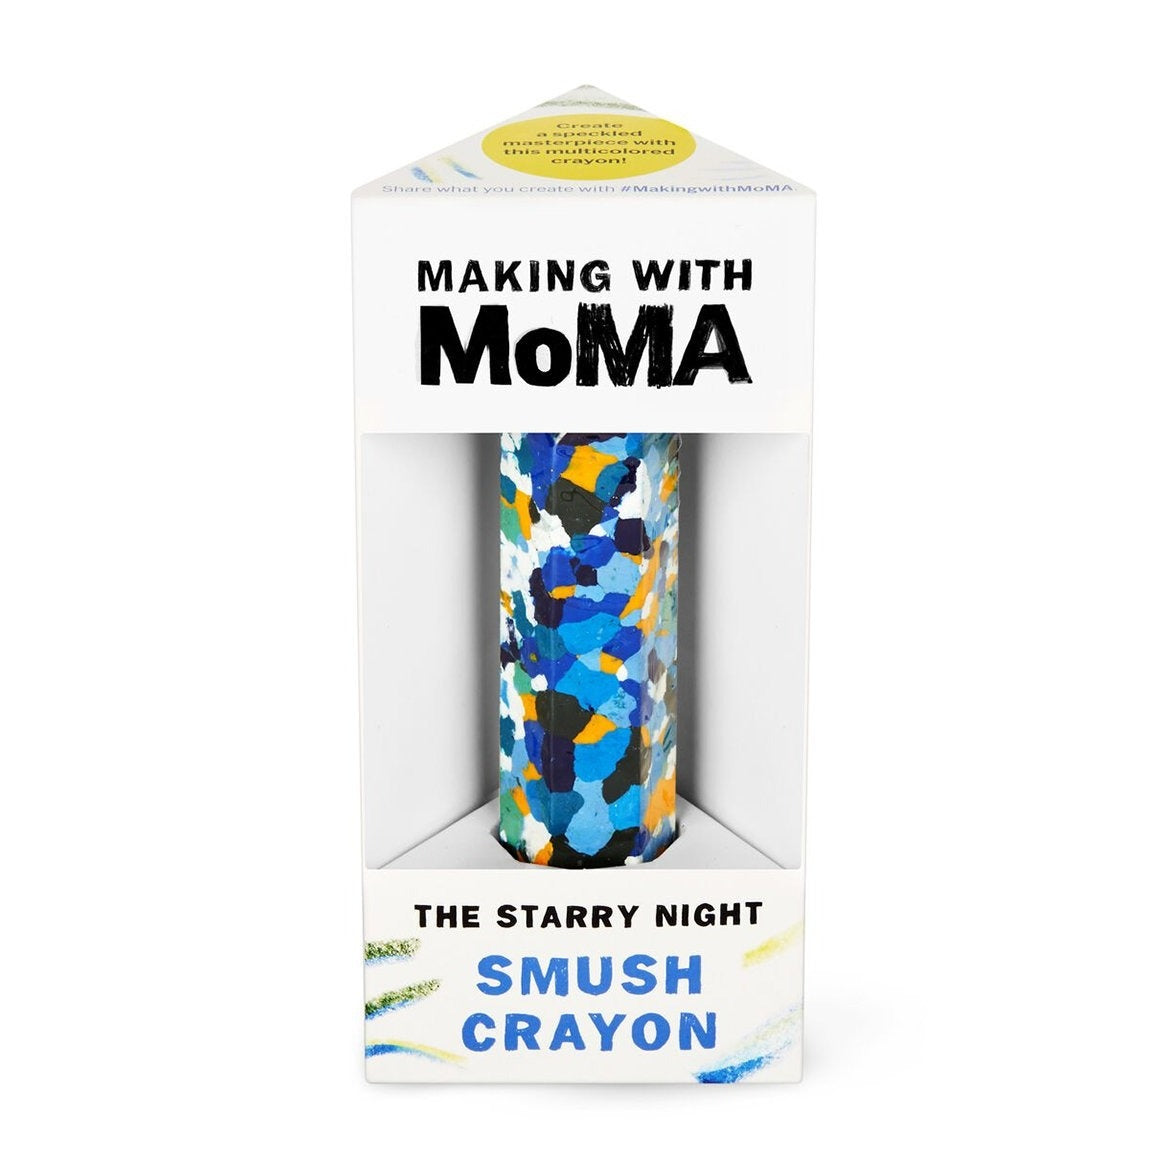 Van Gogh Moma Smush Crayon